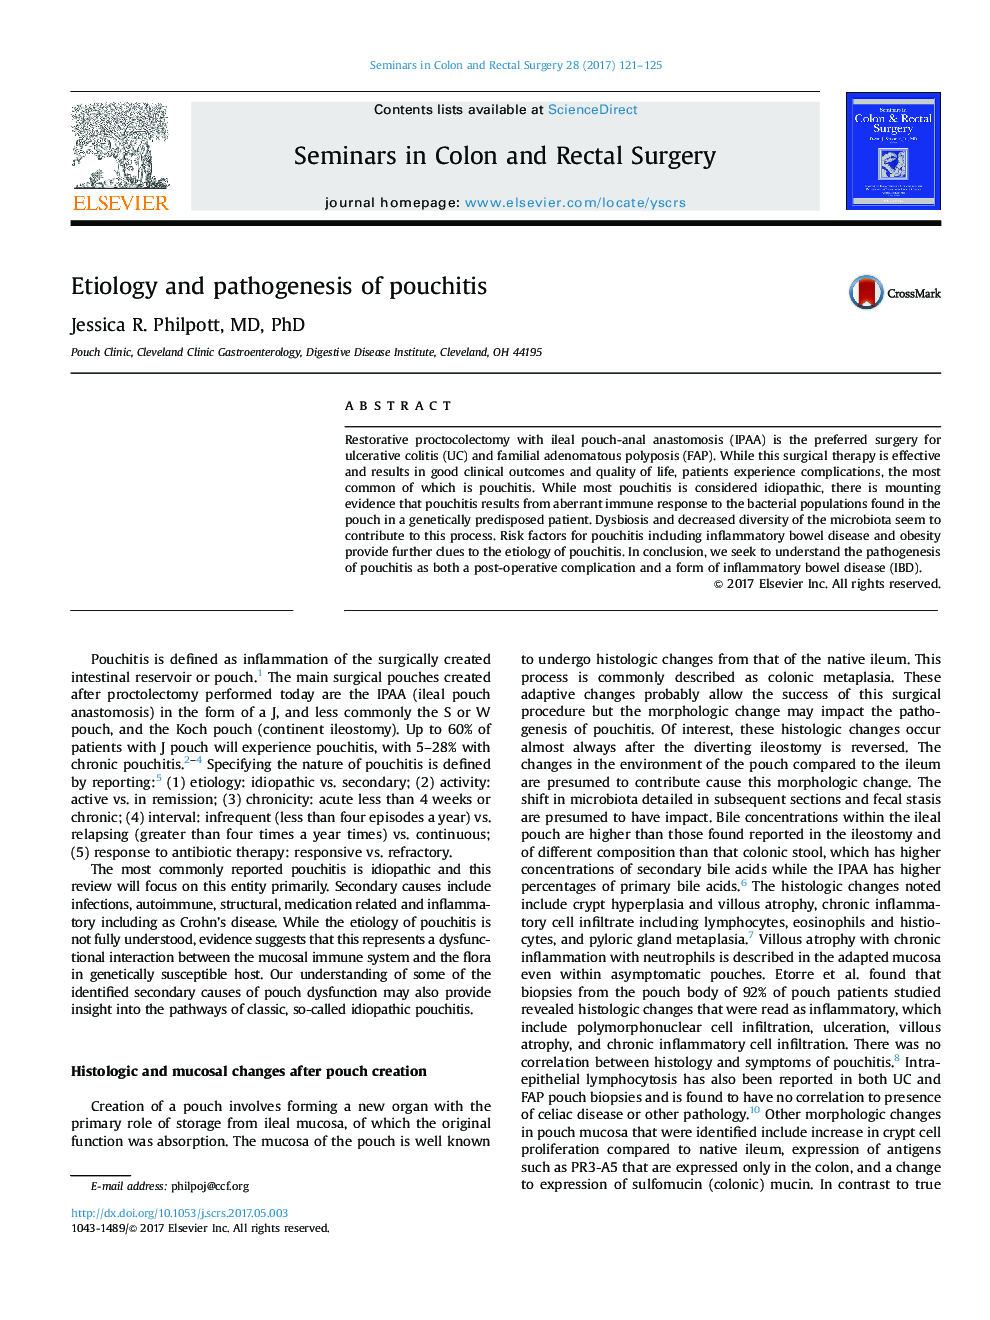 Etiology and pathogenesis of pouchitis